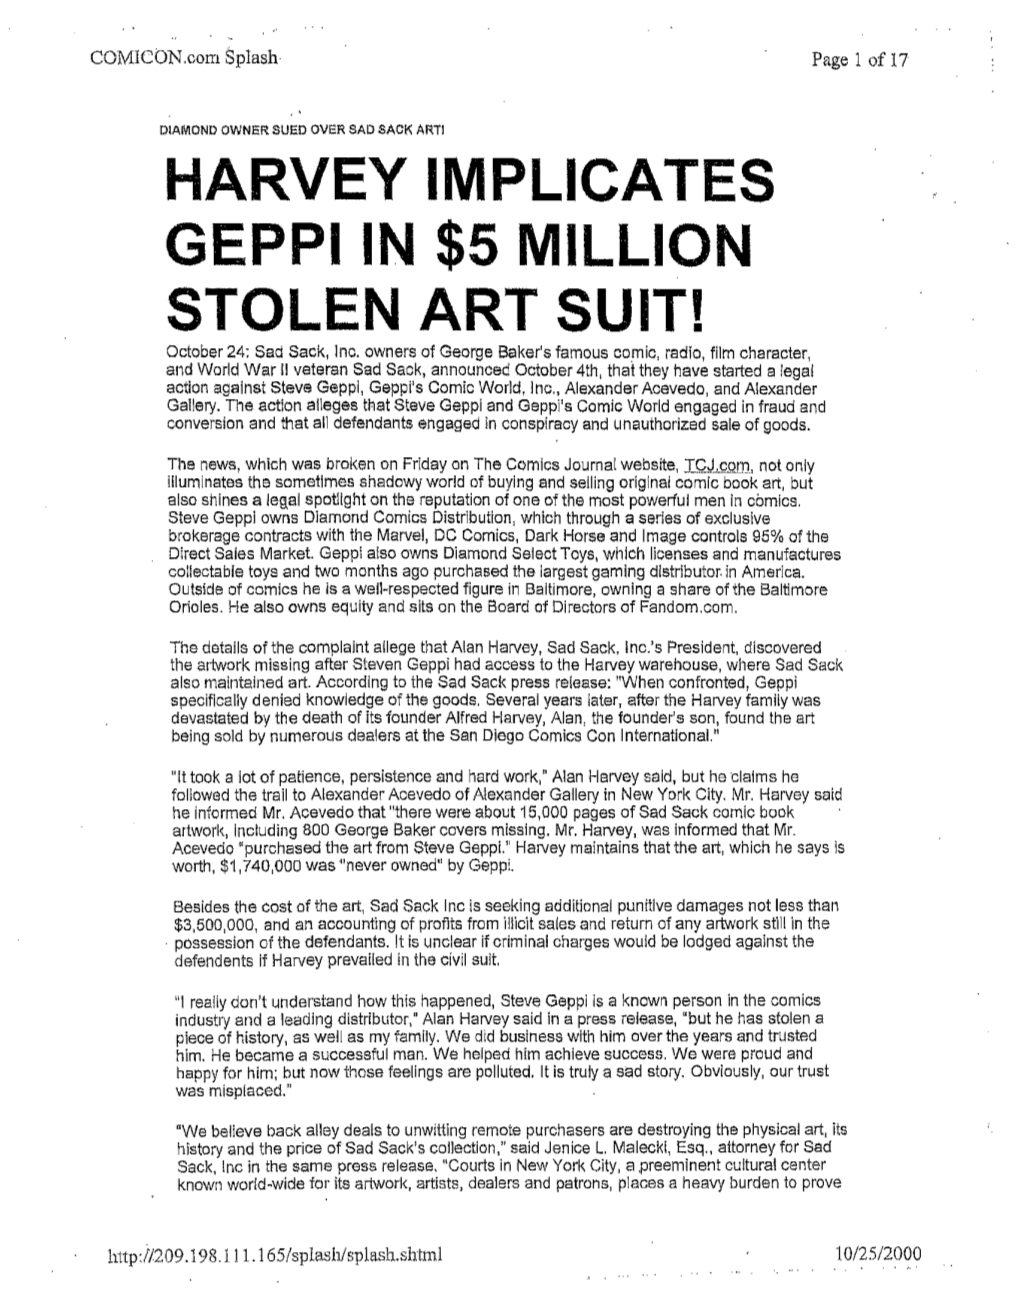 HARVEY IMPLICATES GEPPI in $5 MILLION STOLEN ART SUIT! October 24; Sad Sack, Inc